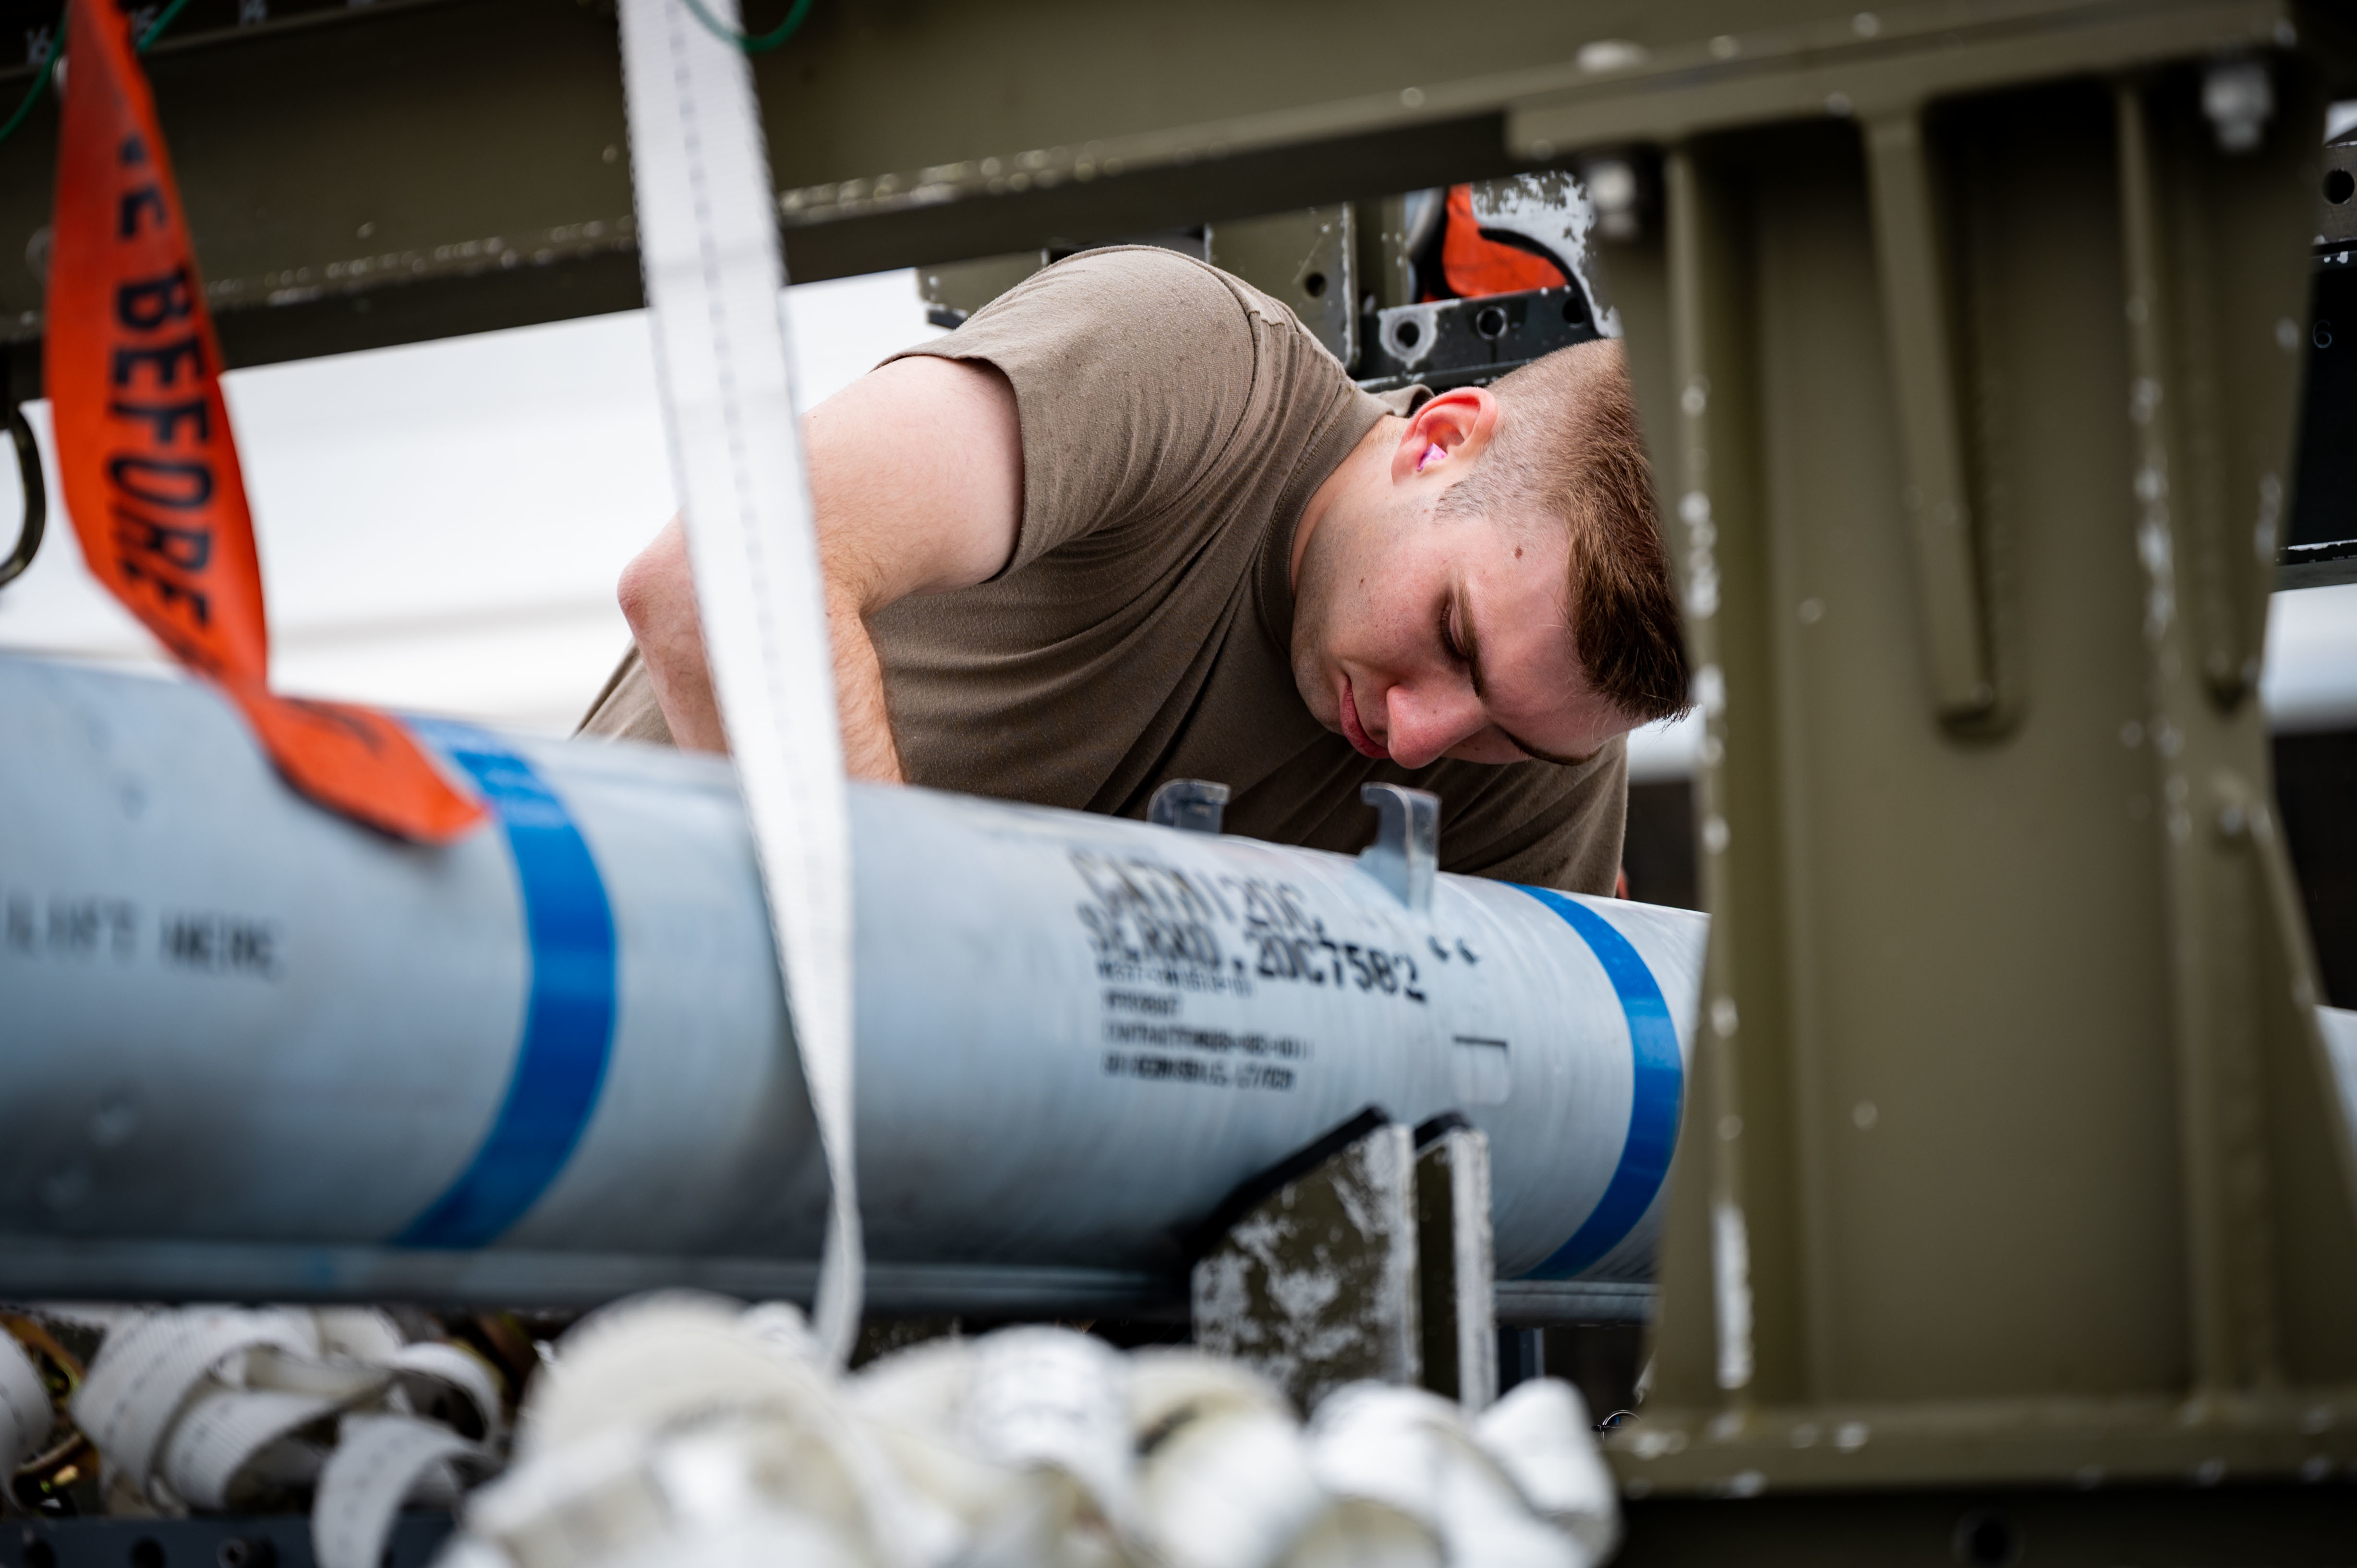 An Airmen examines a munition